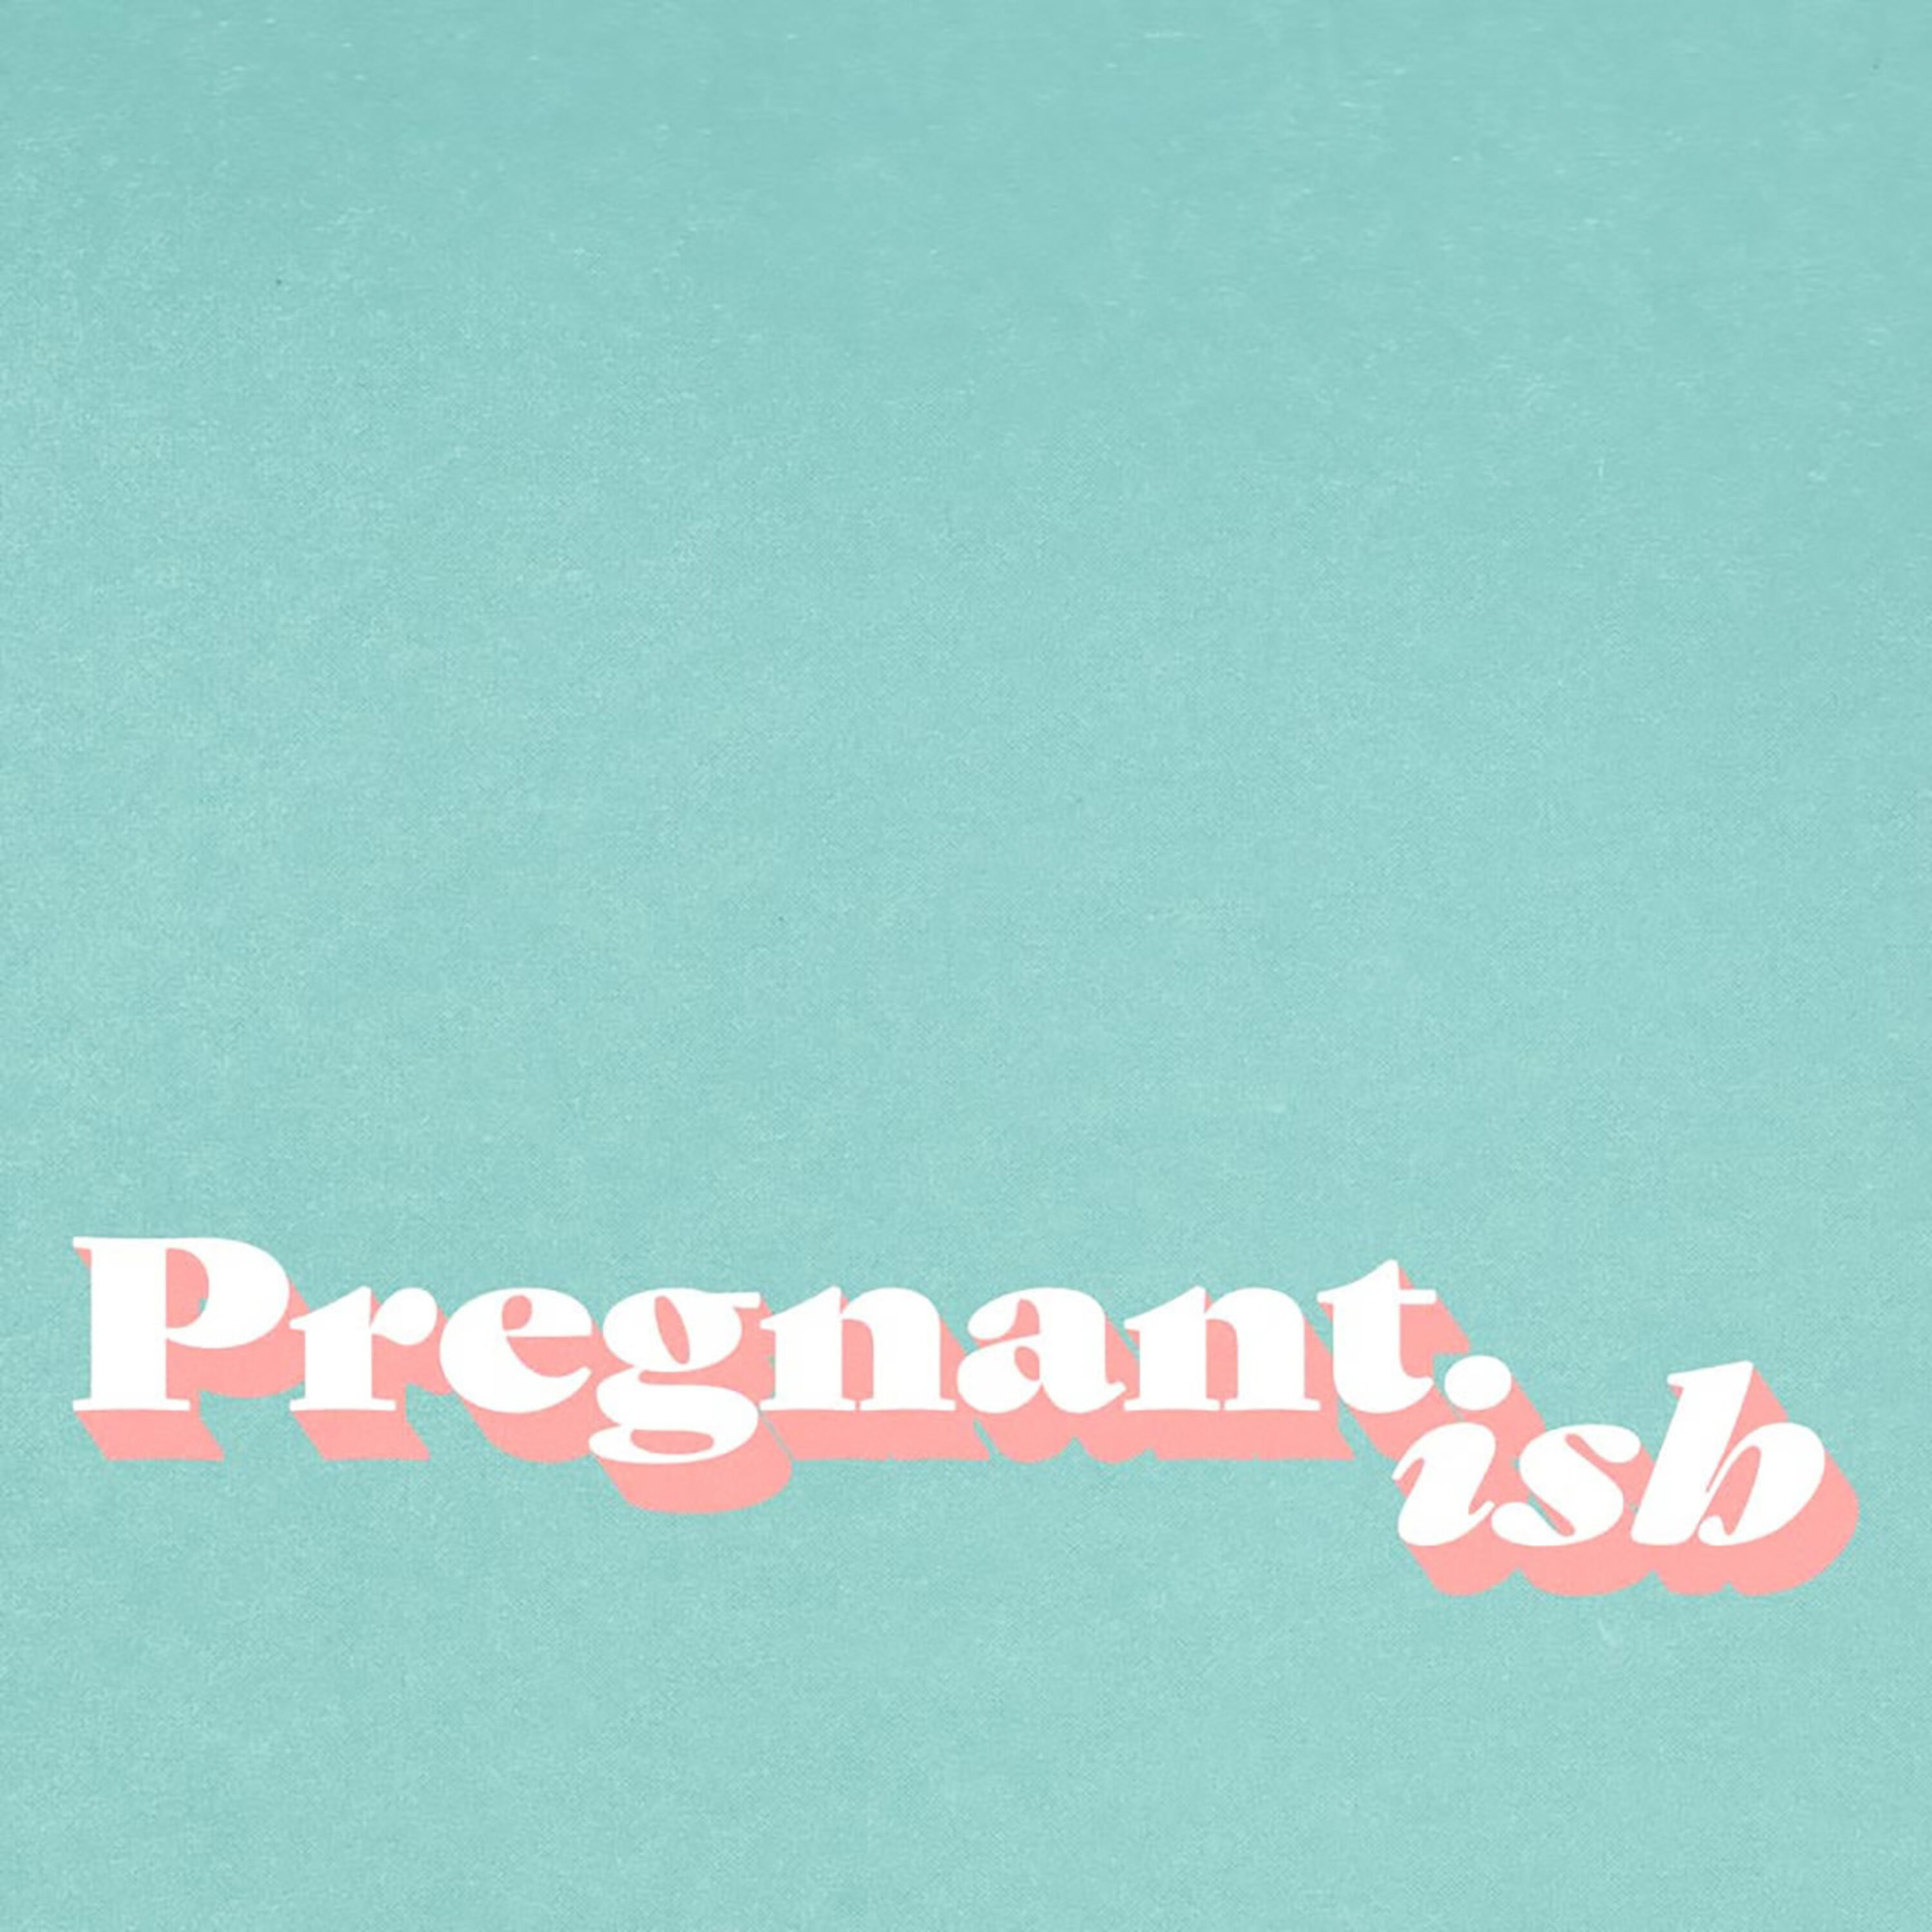 Pregnantish